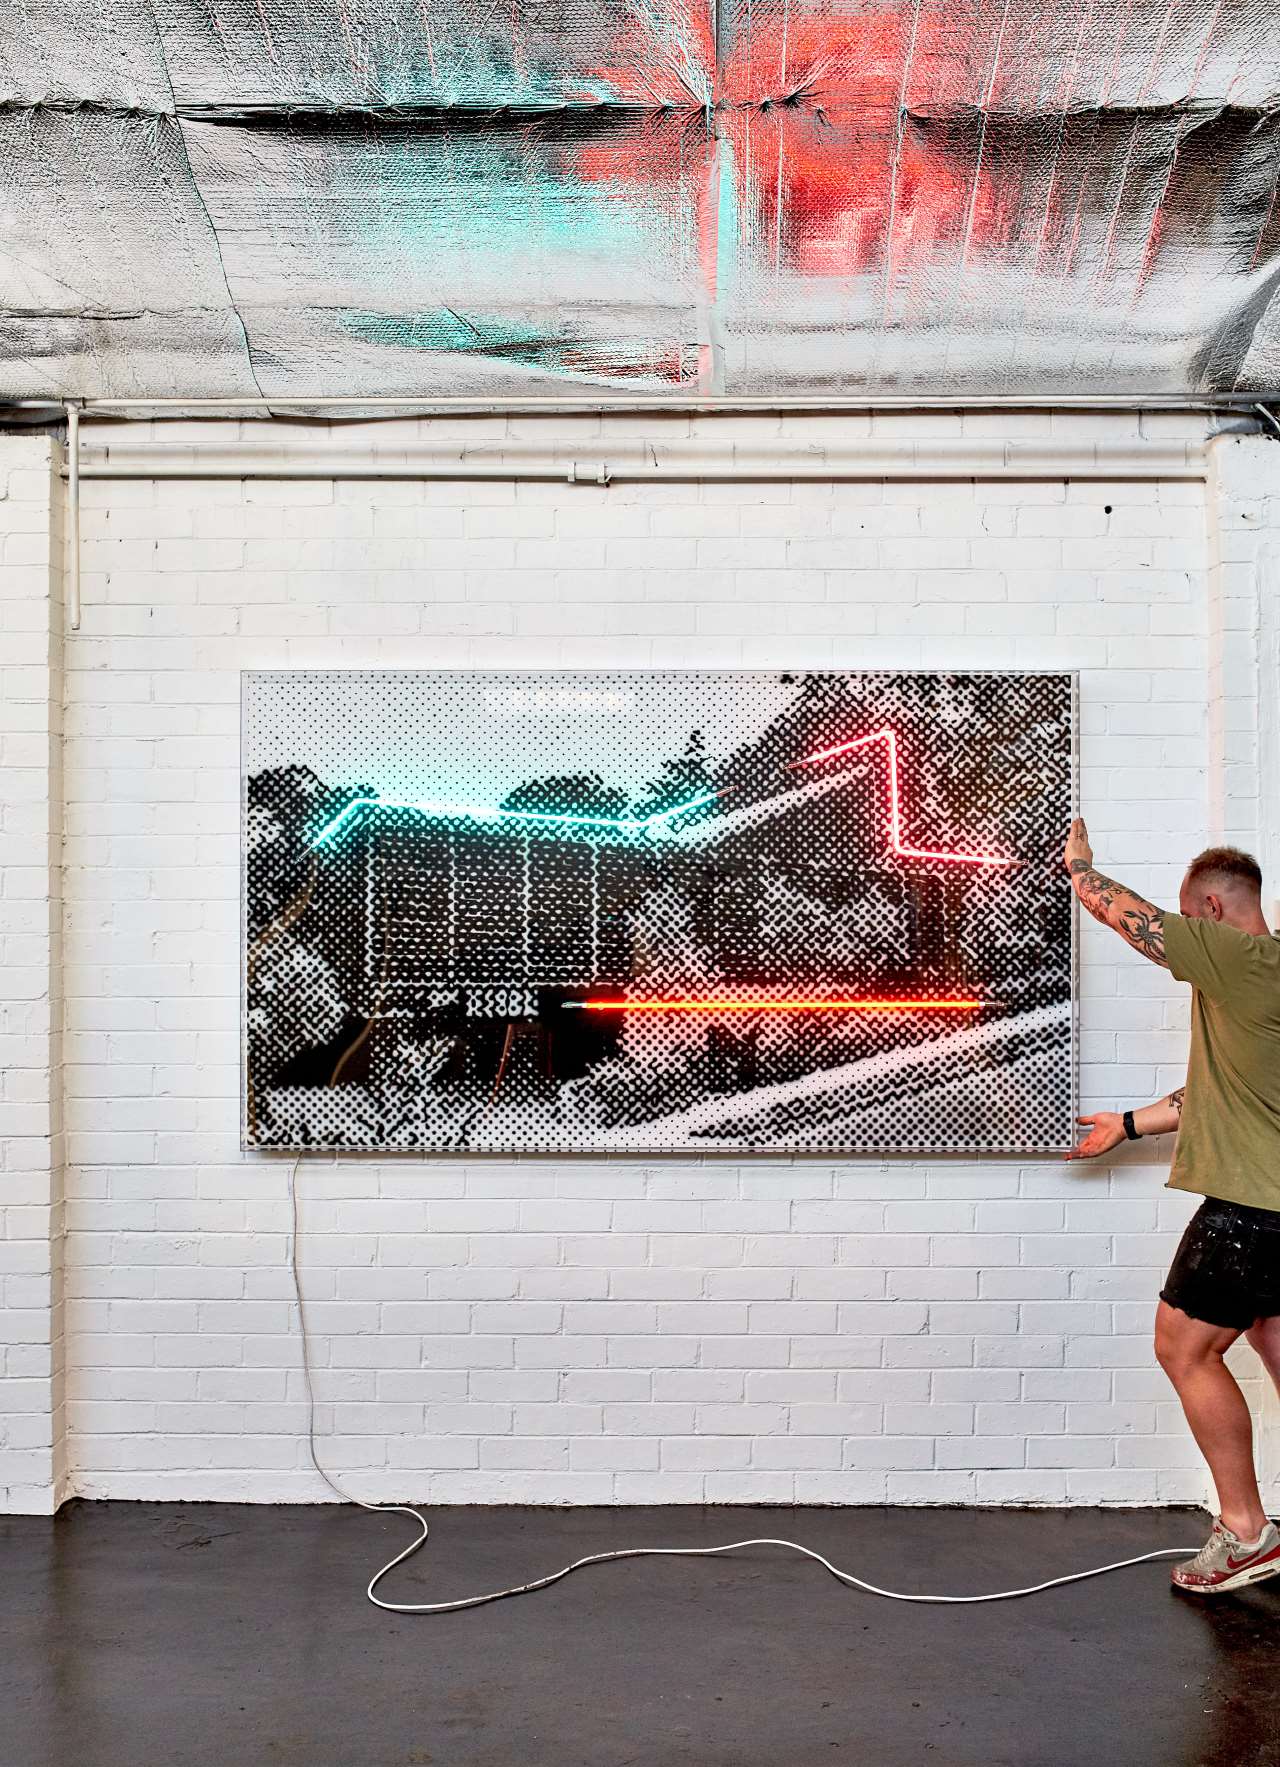 Tom Adair, Yarra St House, 2019. Airbrush polymer and neon on Dibond, Acrylic frame, 120x200cm. © Tom Adair.